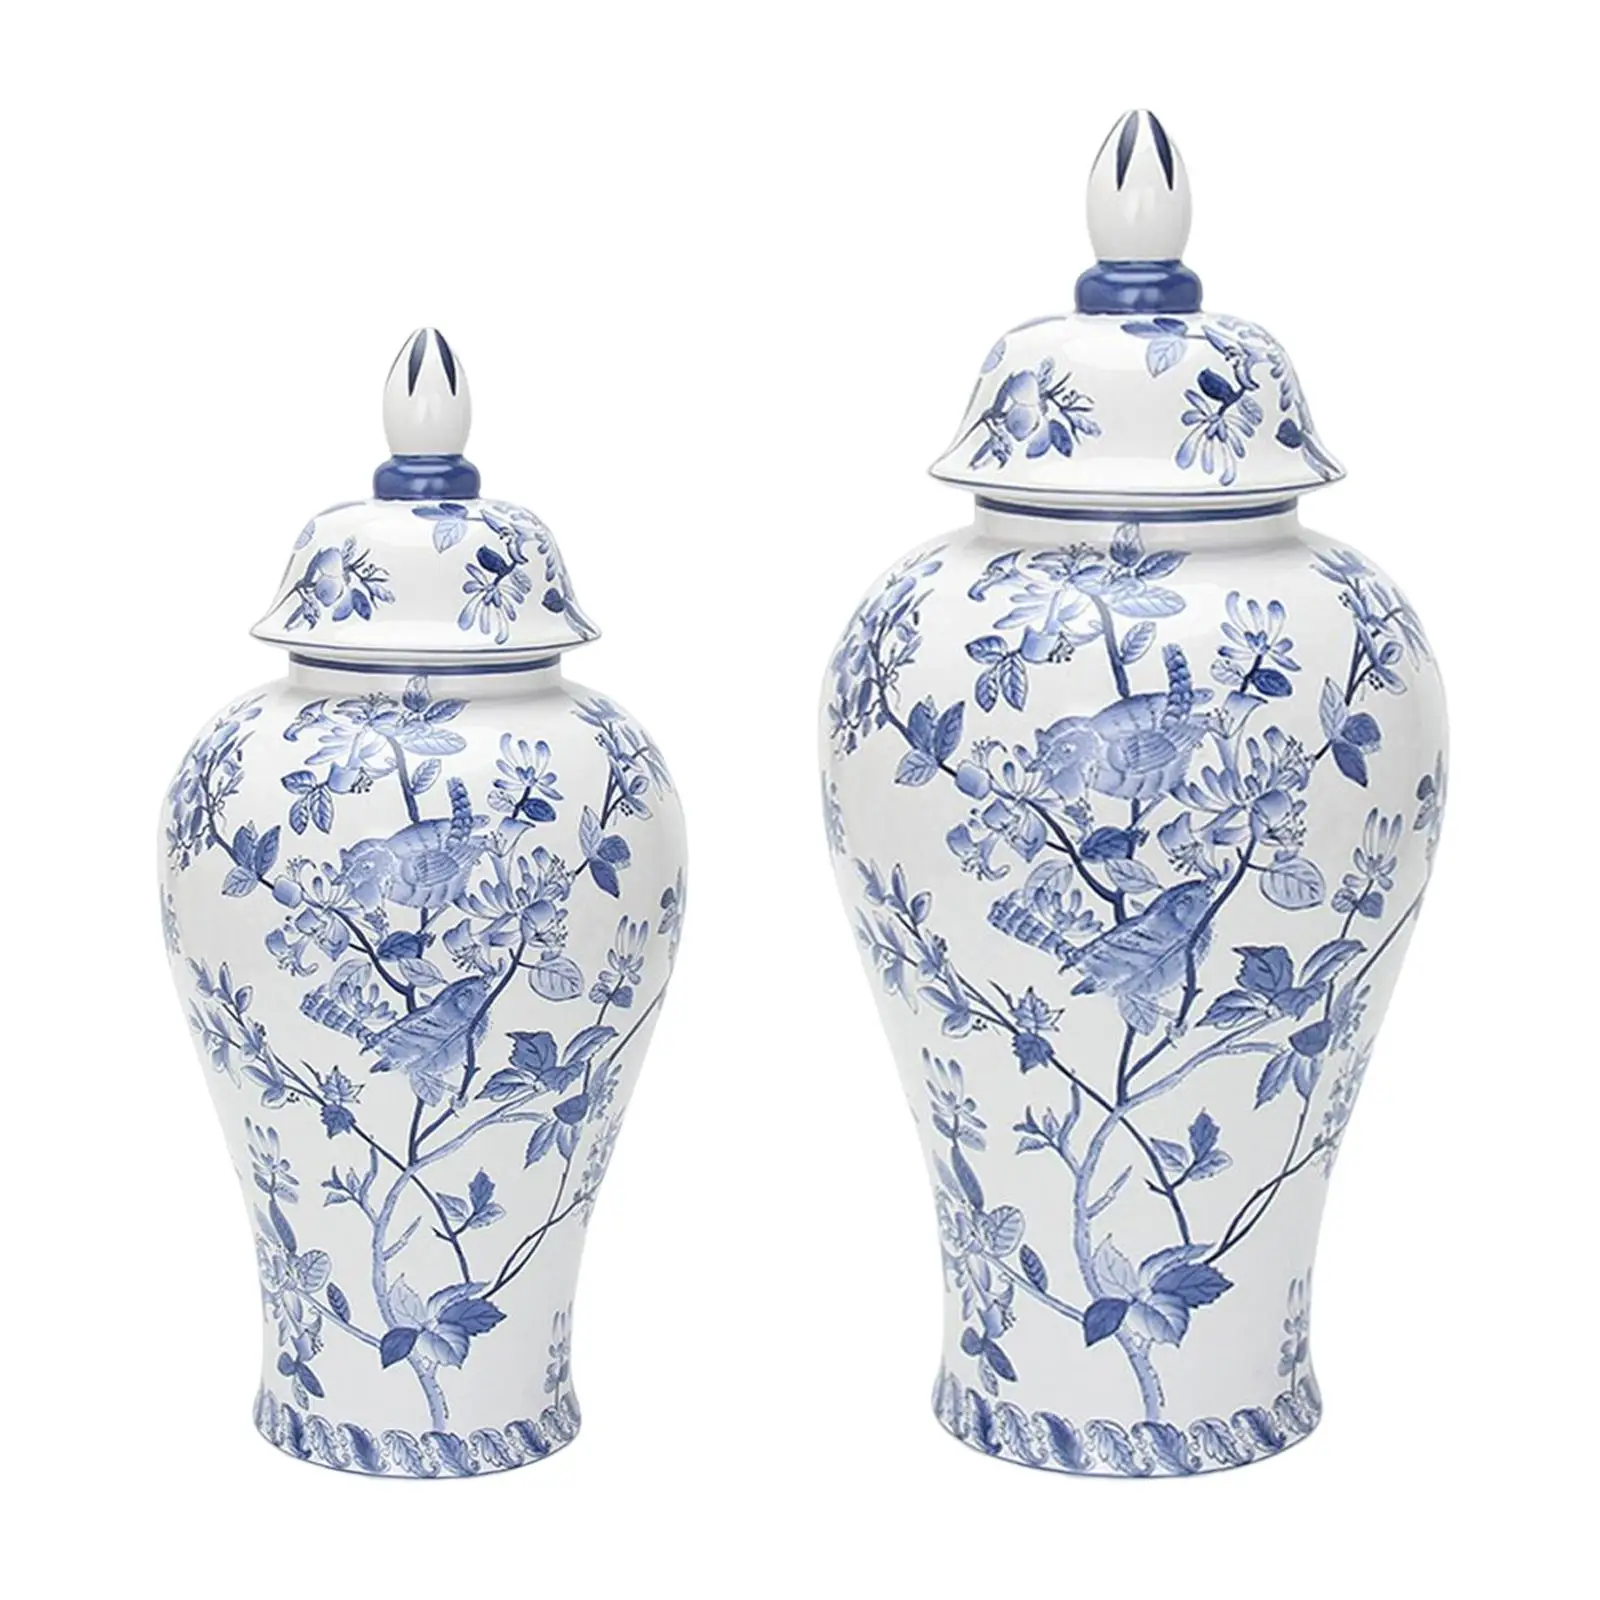 Ceramic Flower Vase Temple Storage Jar Handicraft Table Centerpiece Decor Blue White Porcelain Ginger Jar for Collection Party